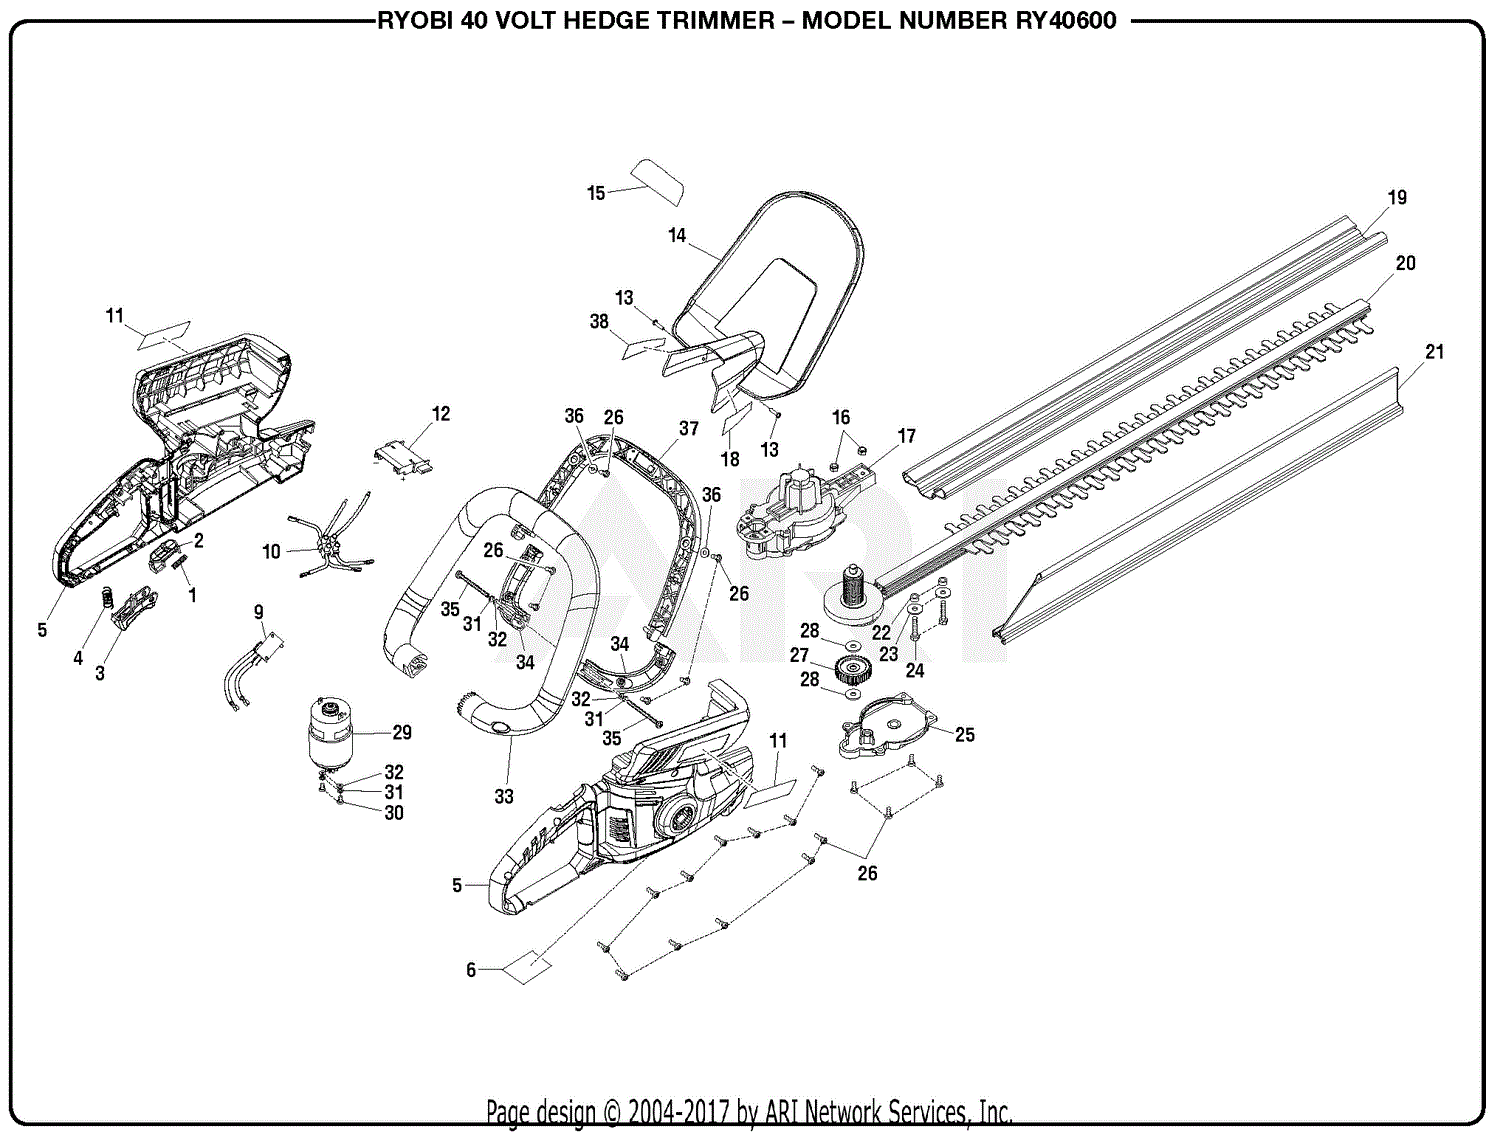 Homelite RY40600 40 Volt Hedge Trimmer Parts Diagram for General Assembly